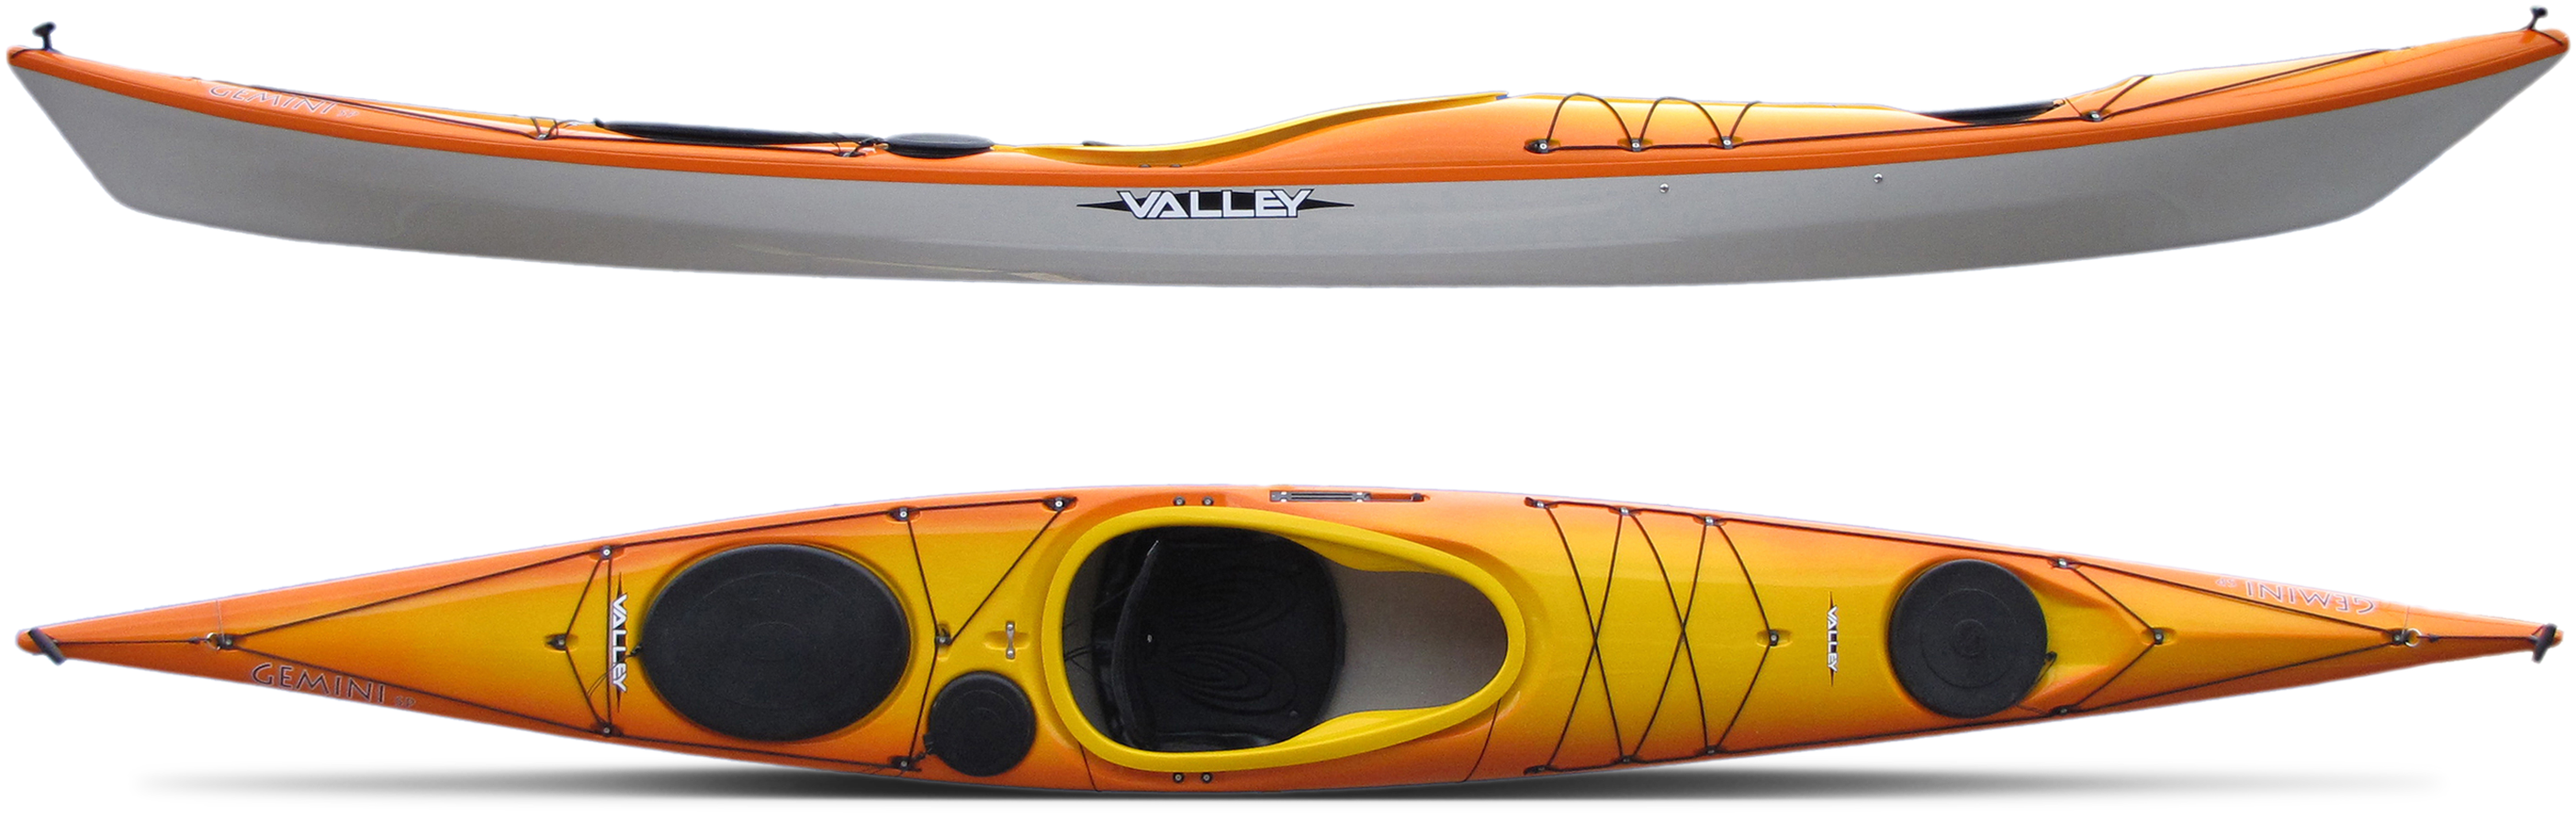 Orange Valley Sea Kayak Topand Side View PNG